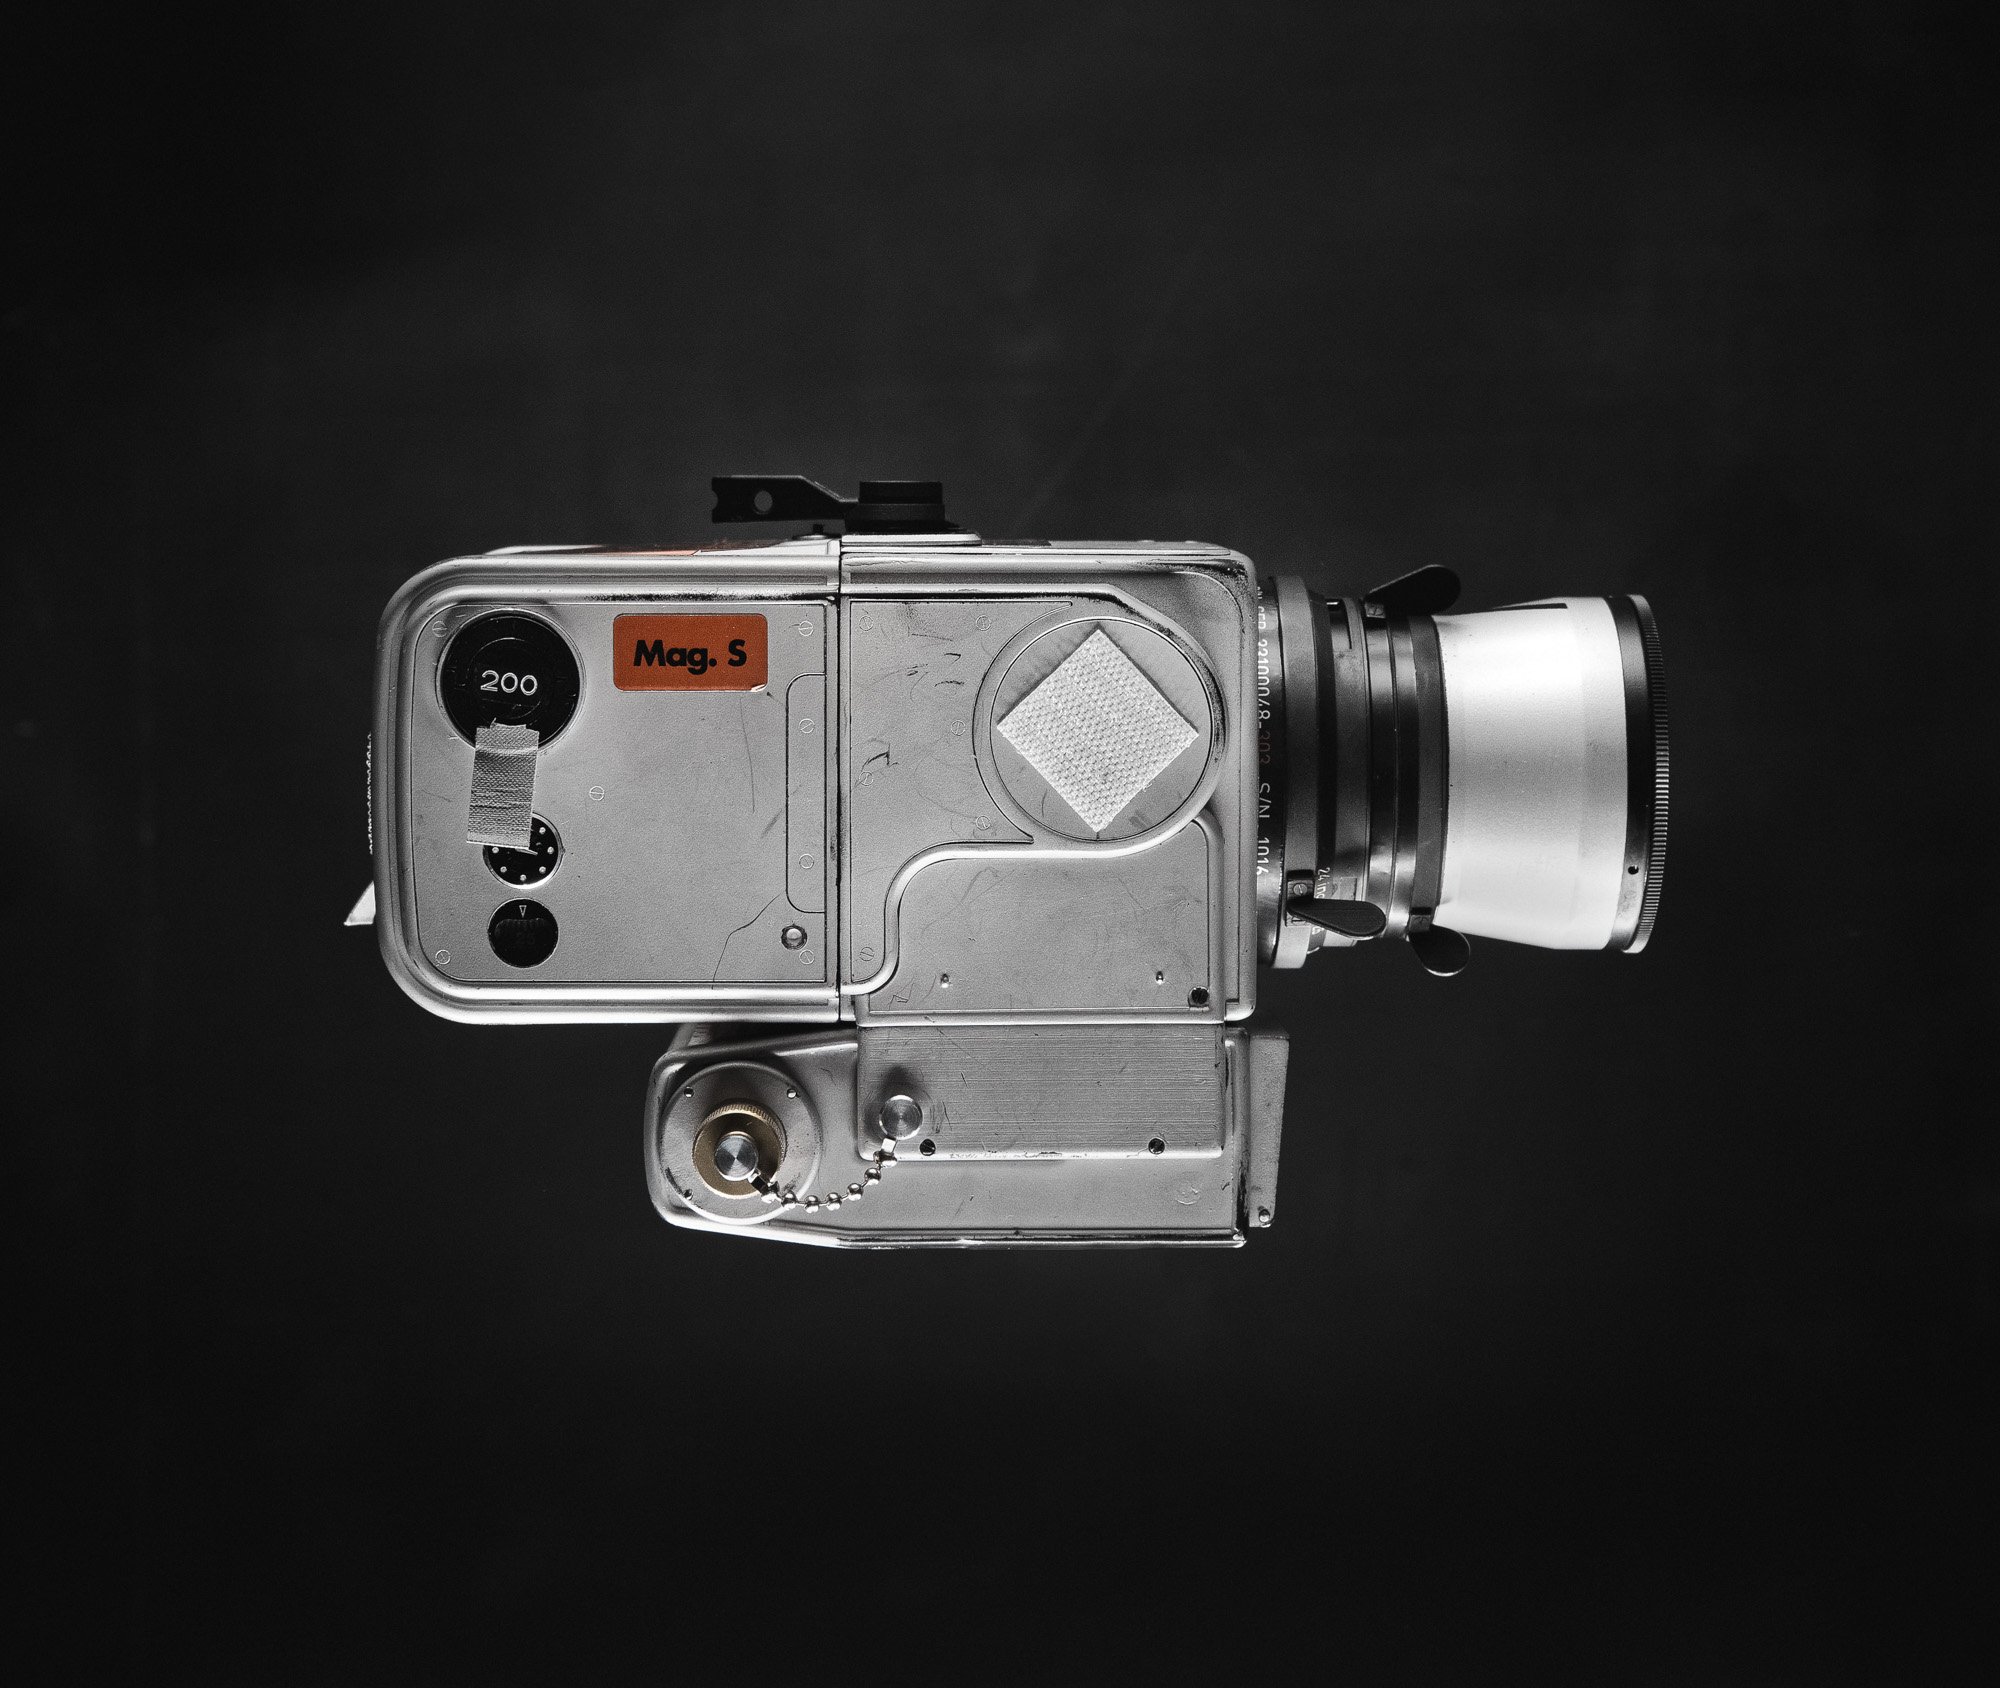 Making an Exact, Working Replica of the Apollo 11 Moon Camera - PetaPixel